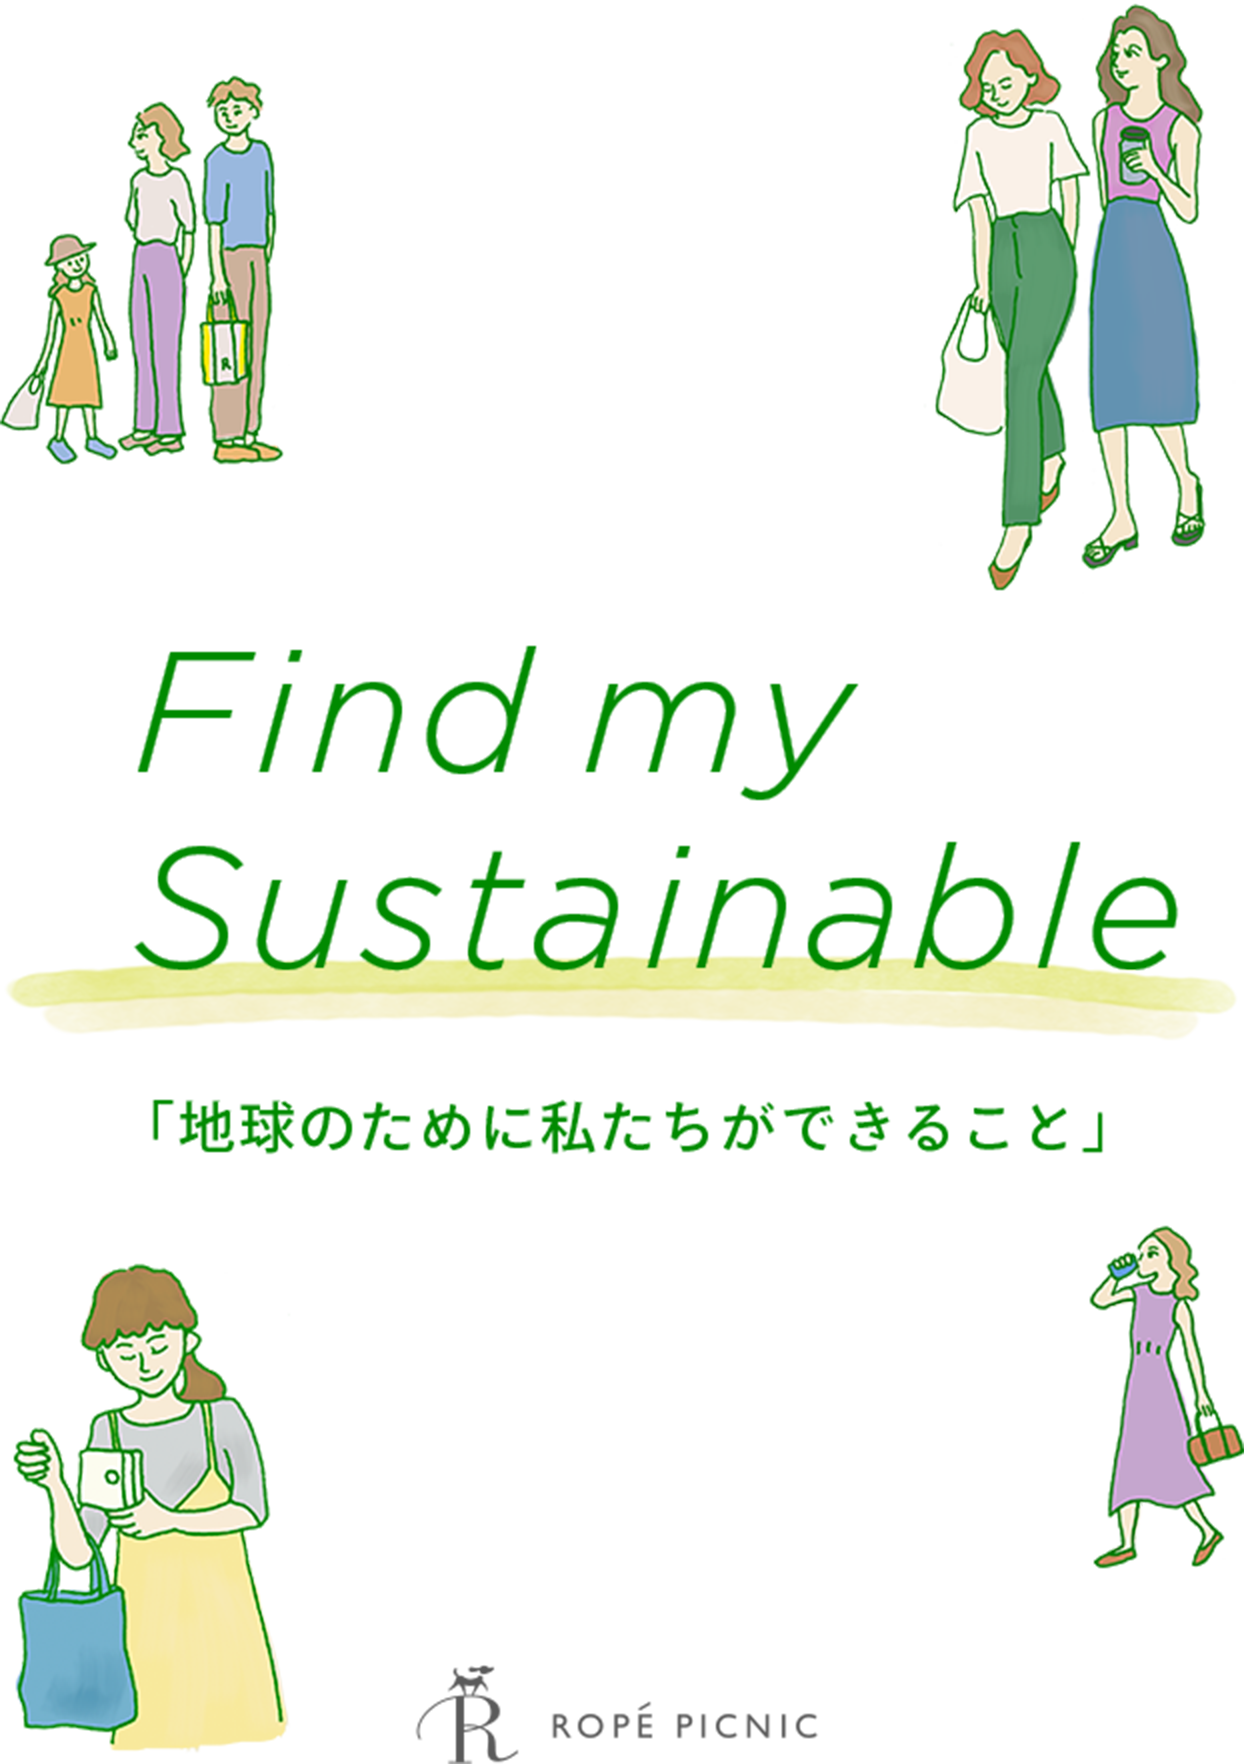 Find my Sustainable「地球のために私たちができること」